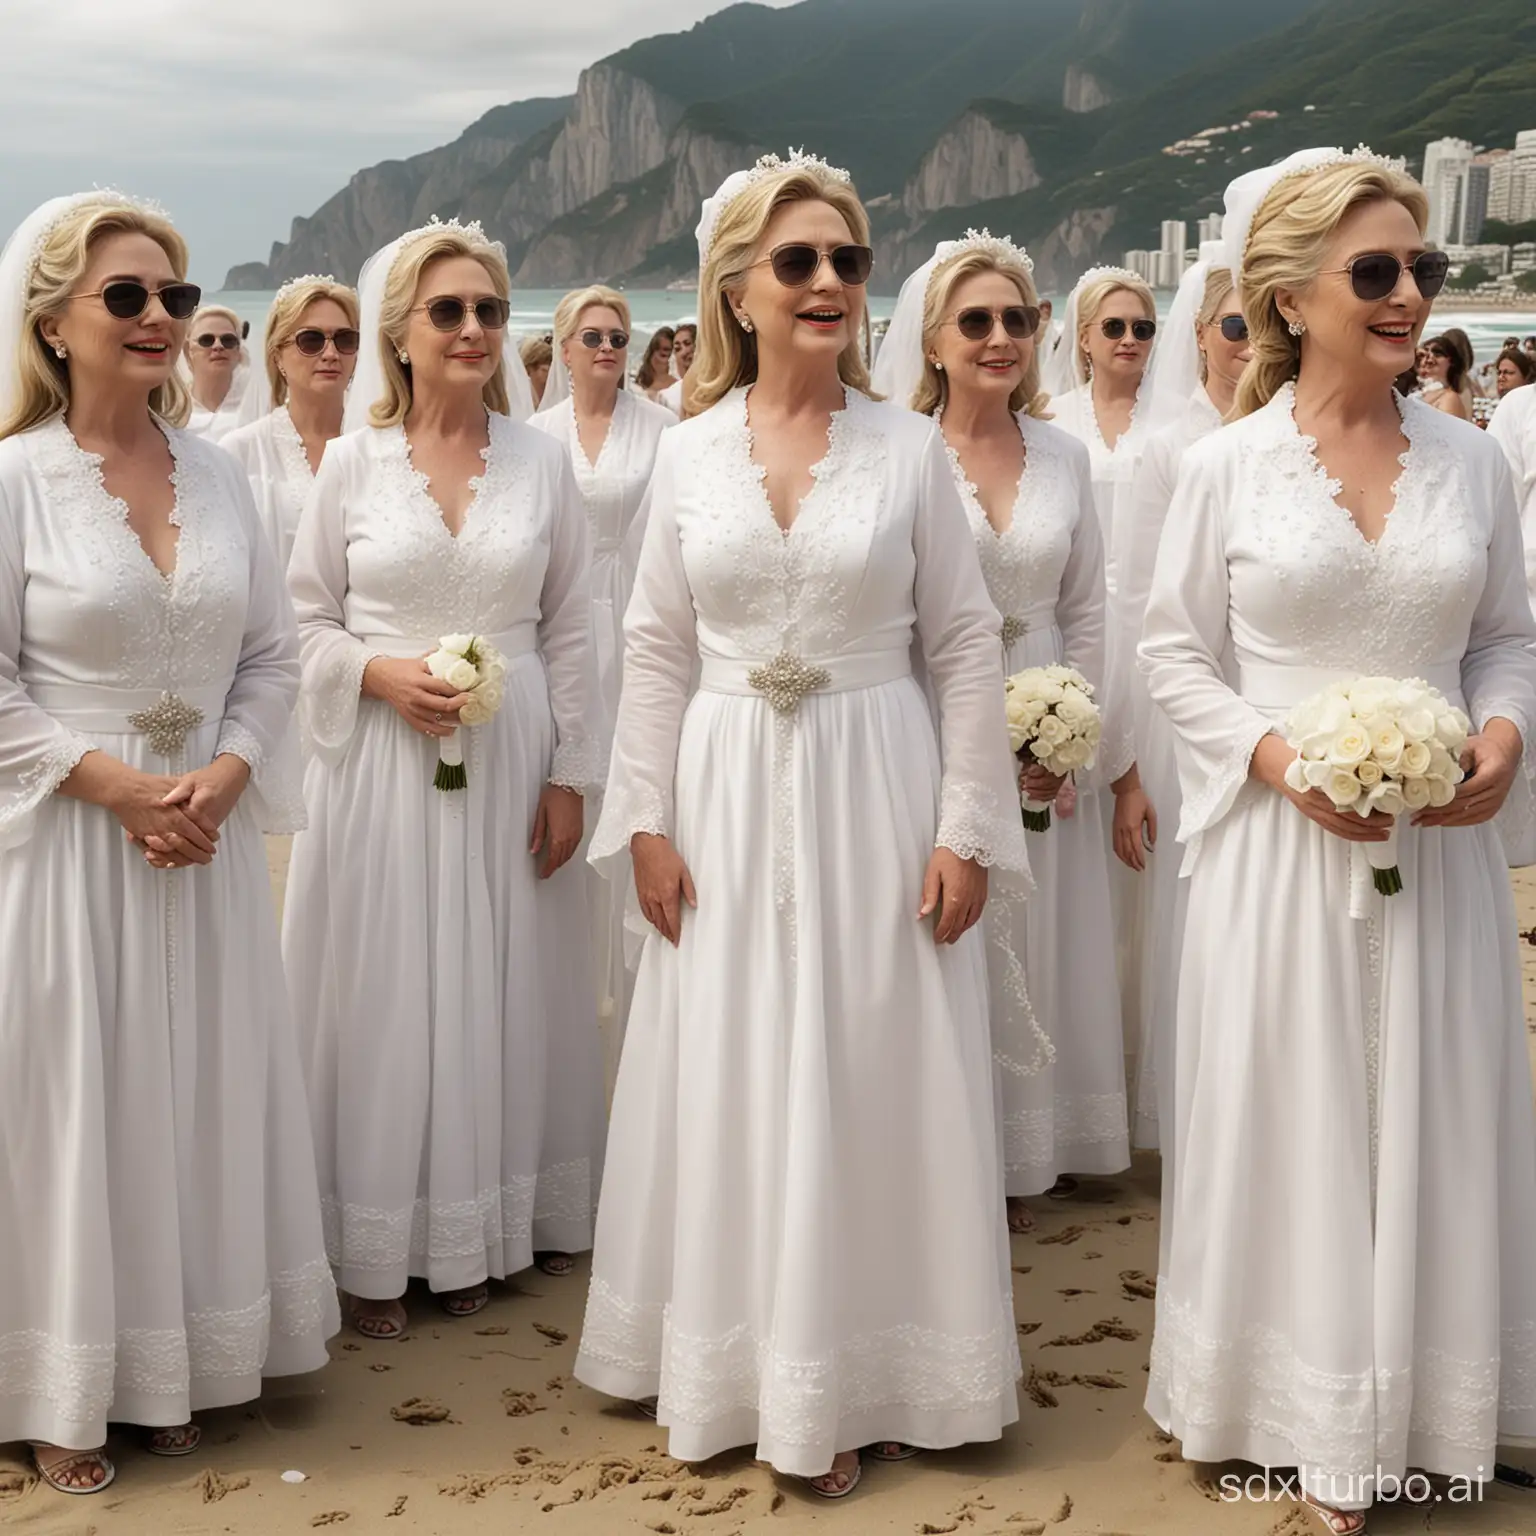 Hillary-Clinton-Clones-Brides-Discussing-on-Copacabana-Beach